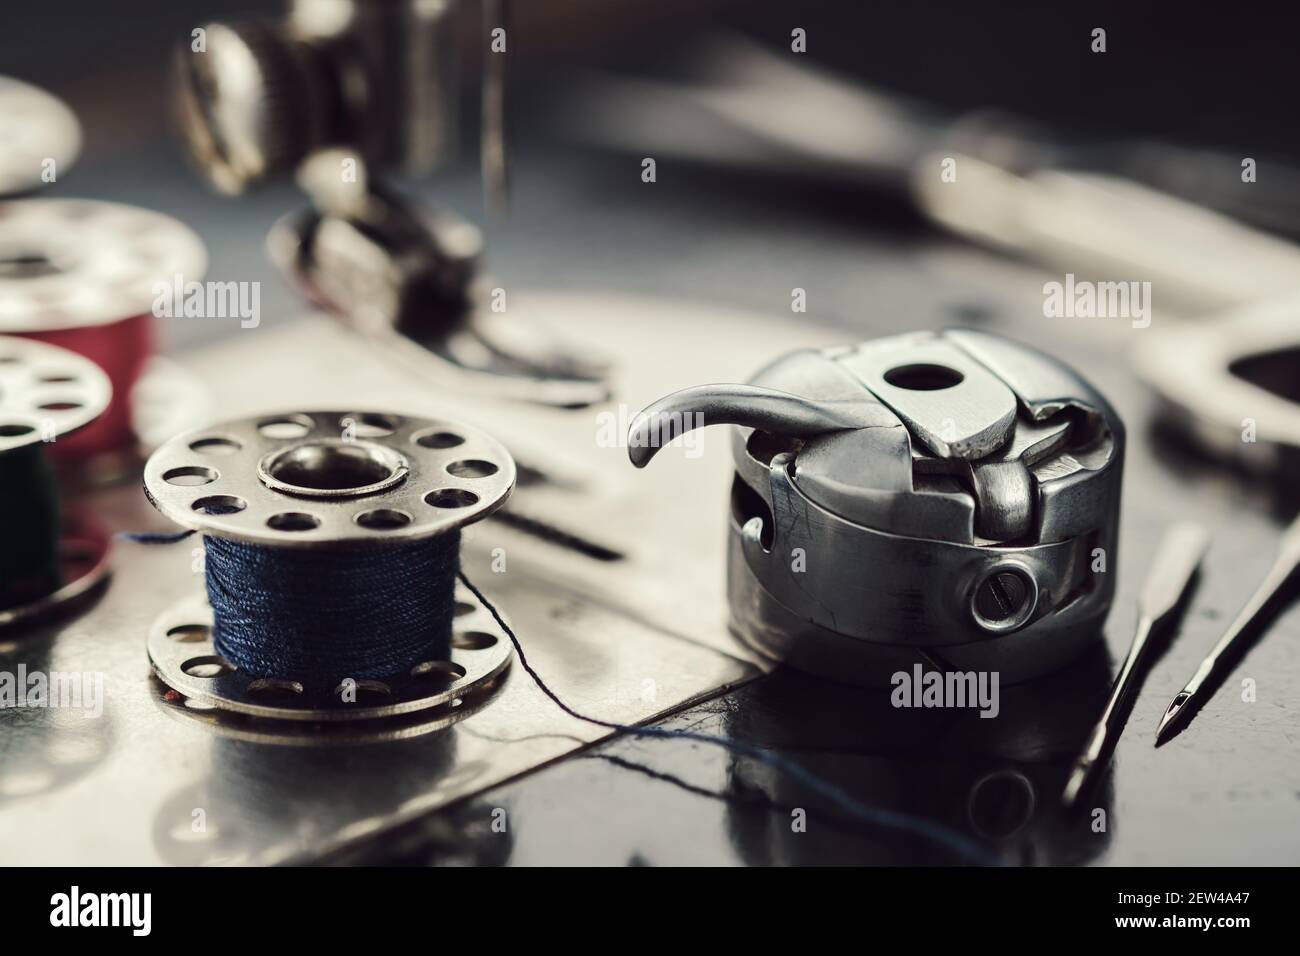 Handdrawn Vintage Sewing Kit Sewing  Machineneedlestitchingscissorsbuttonsneedle Stock Illustration 1717605766